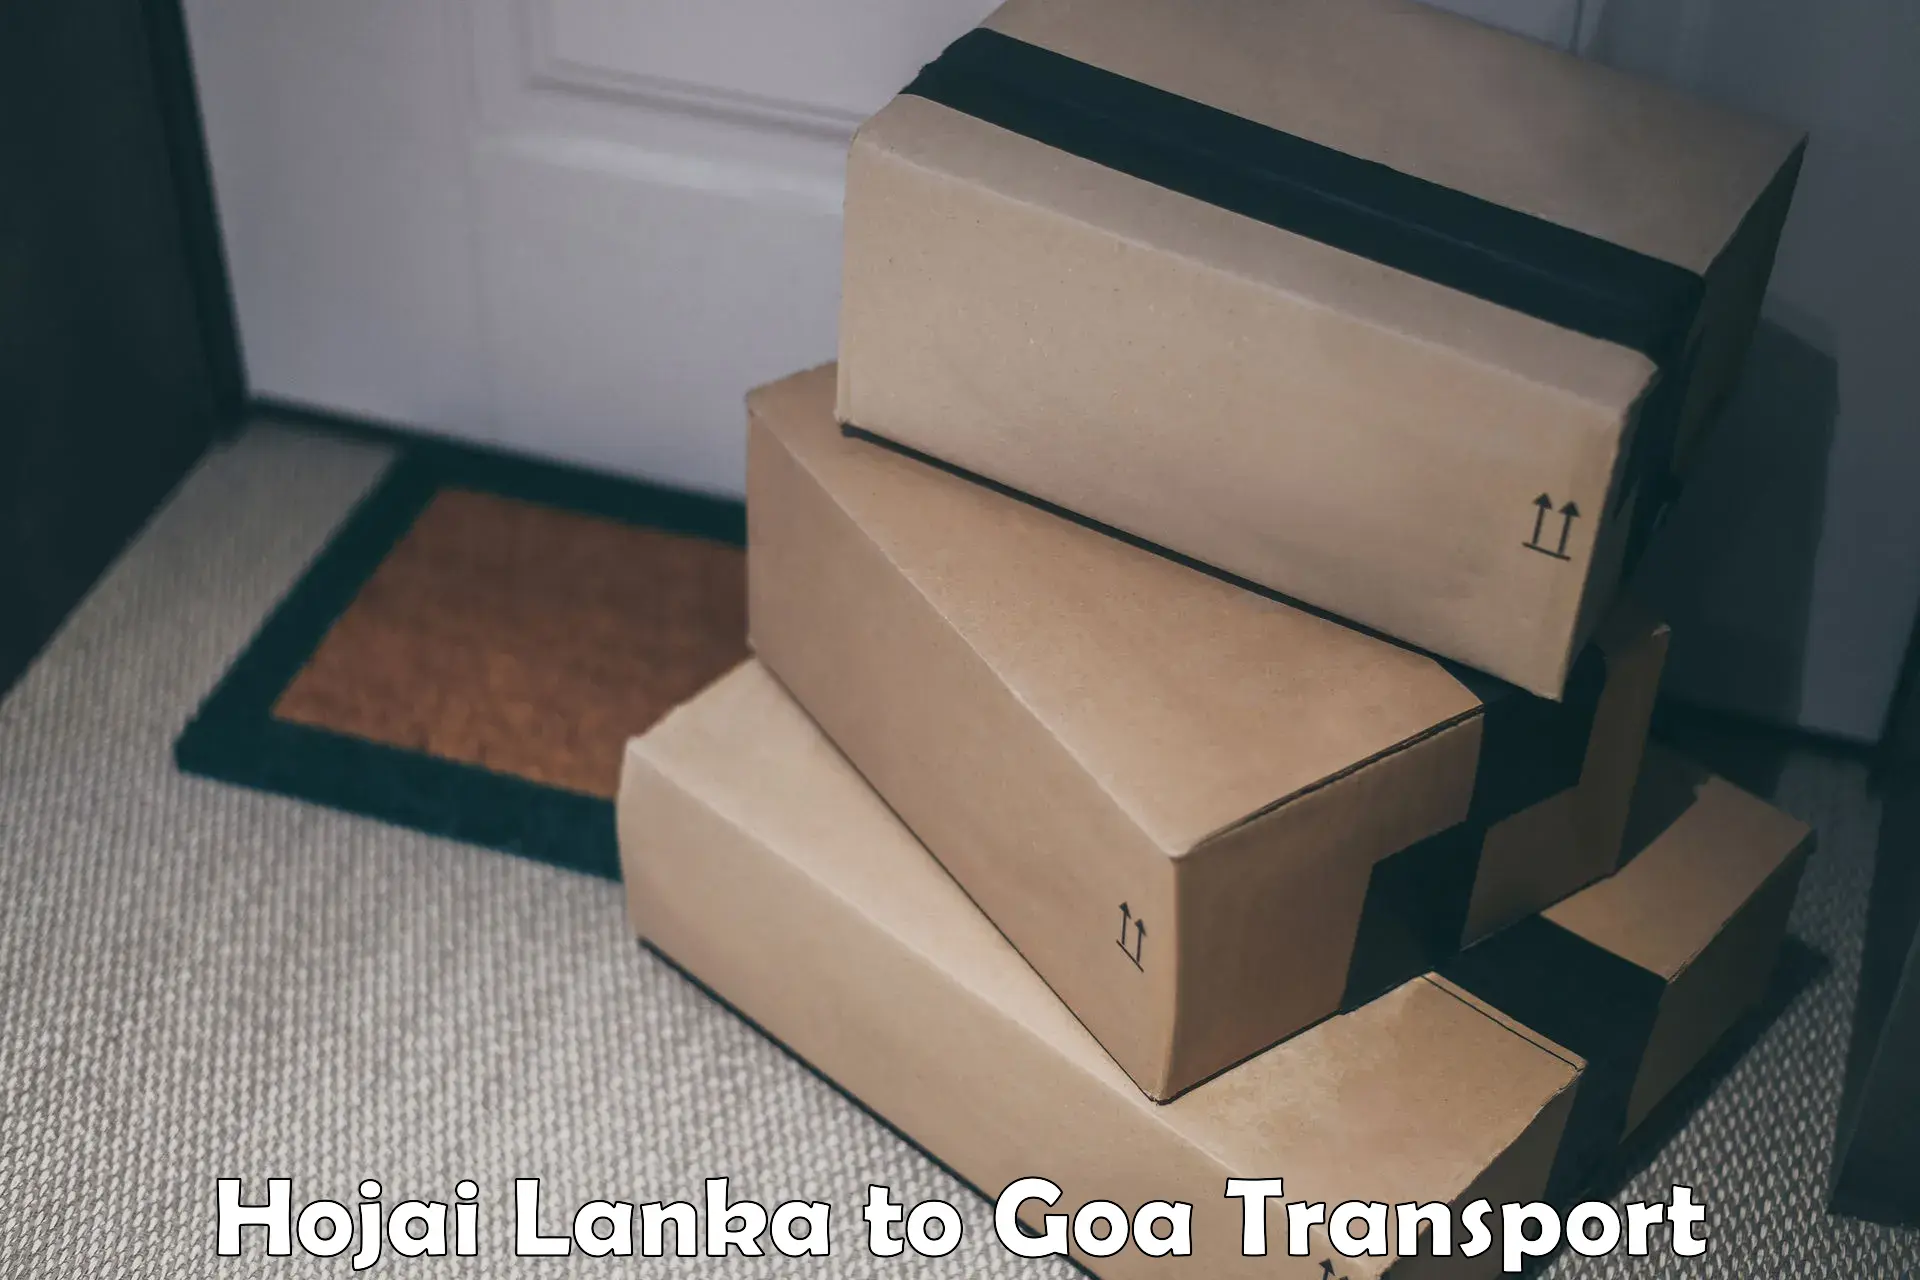 Bike transfer Hojai Lanka to South Goa